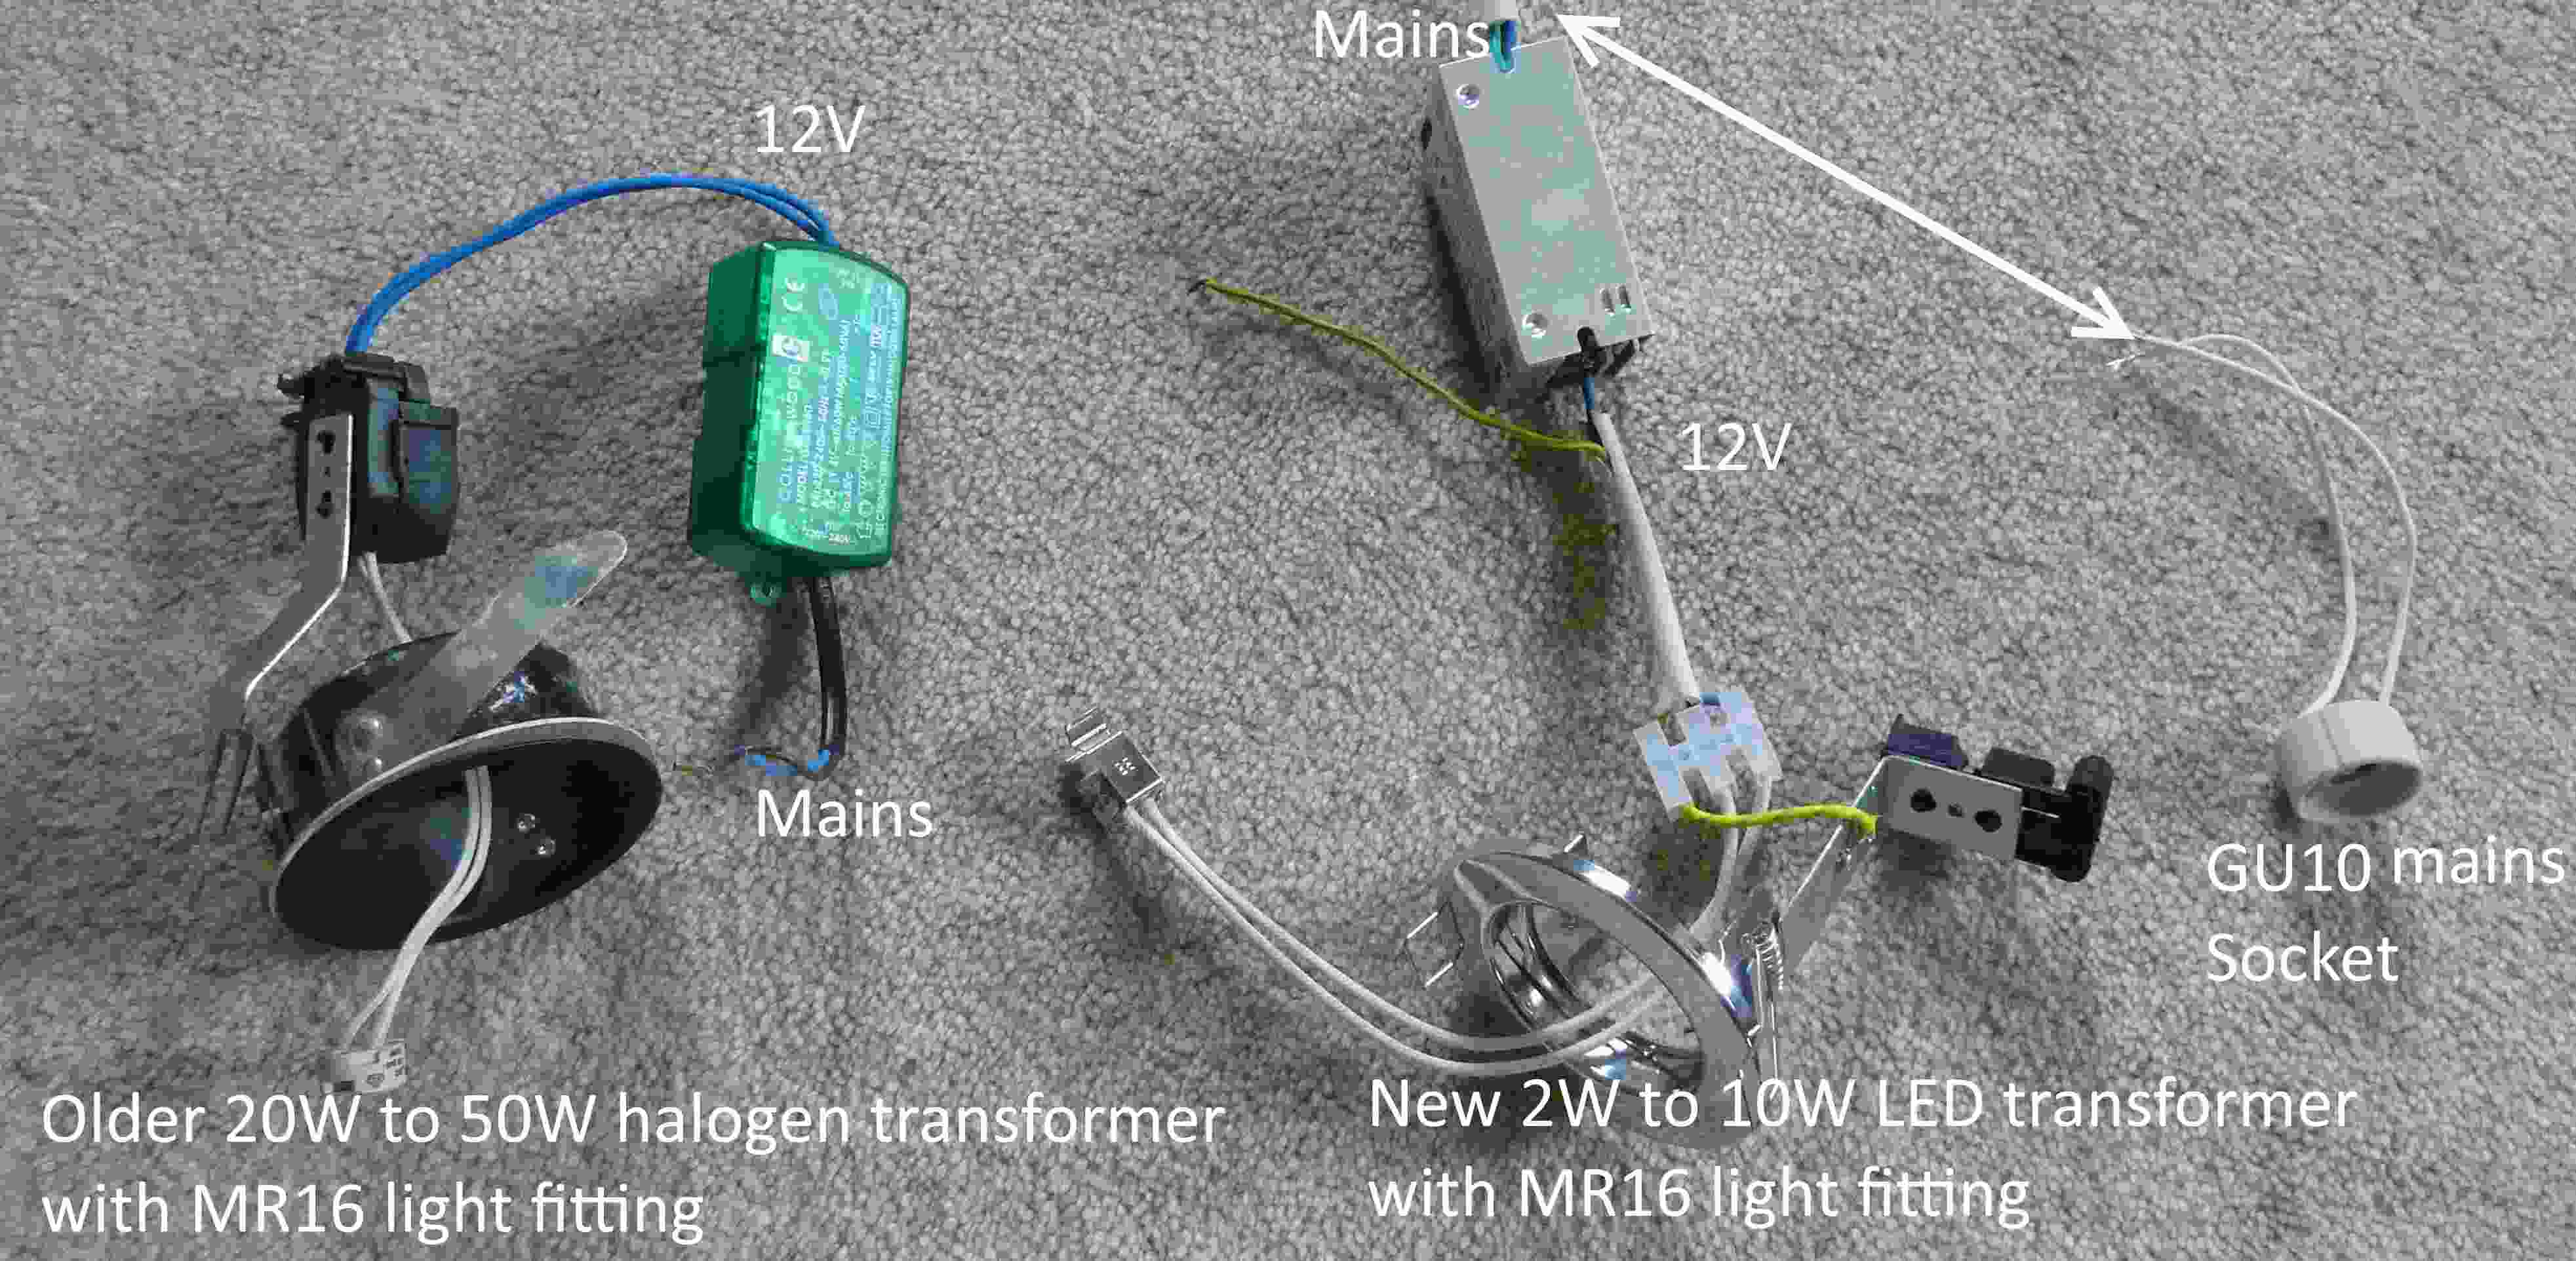 LED MR17 transformers